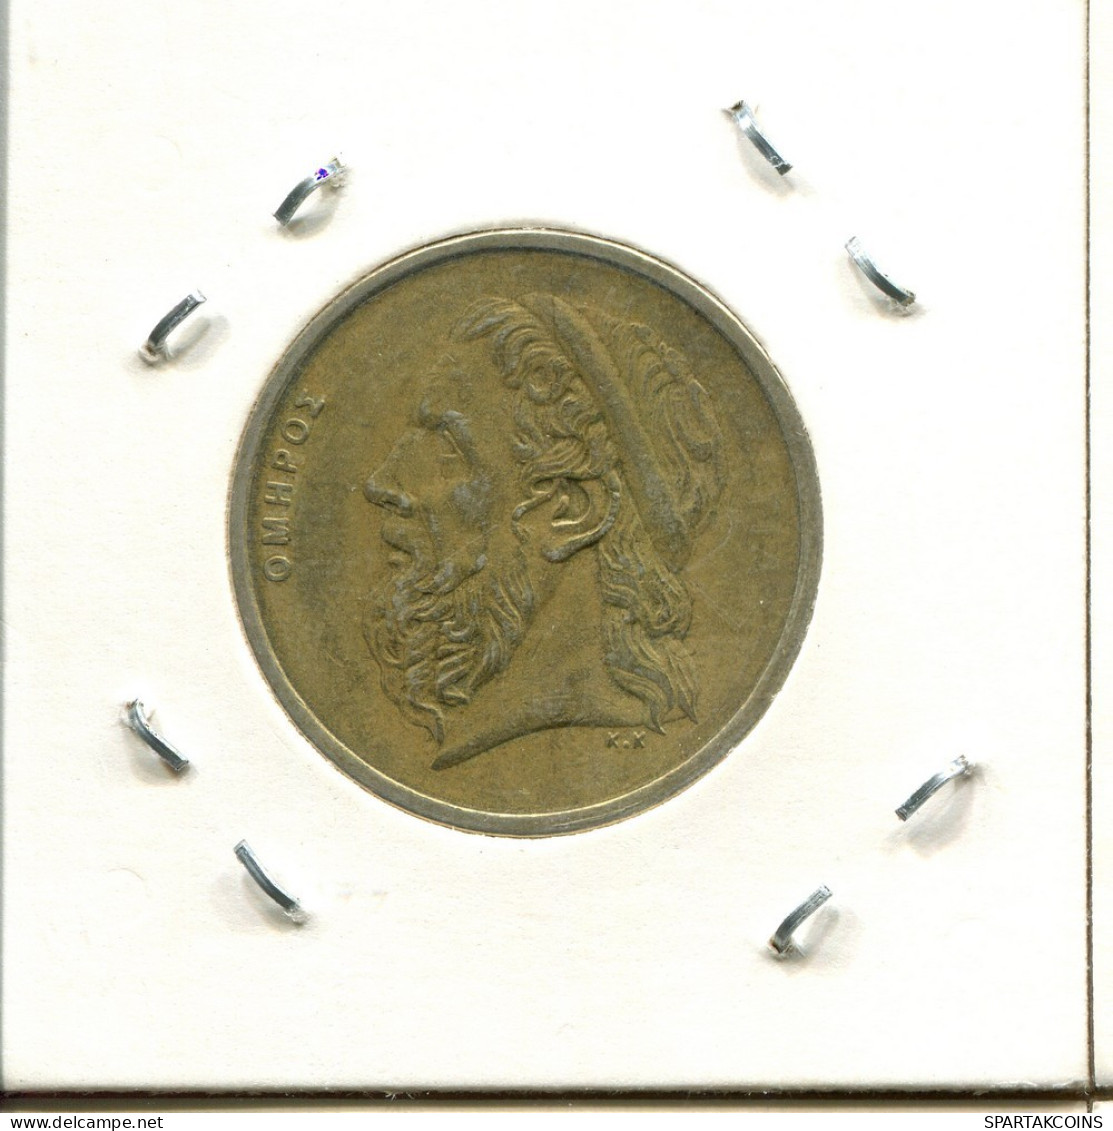 50 DRACHMES 1986 GREECE Coin #AS440.U.A - Griechenland